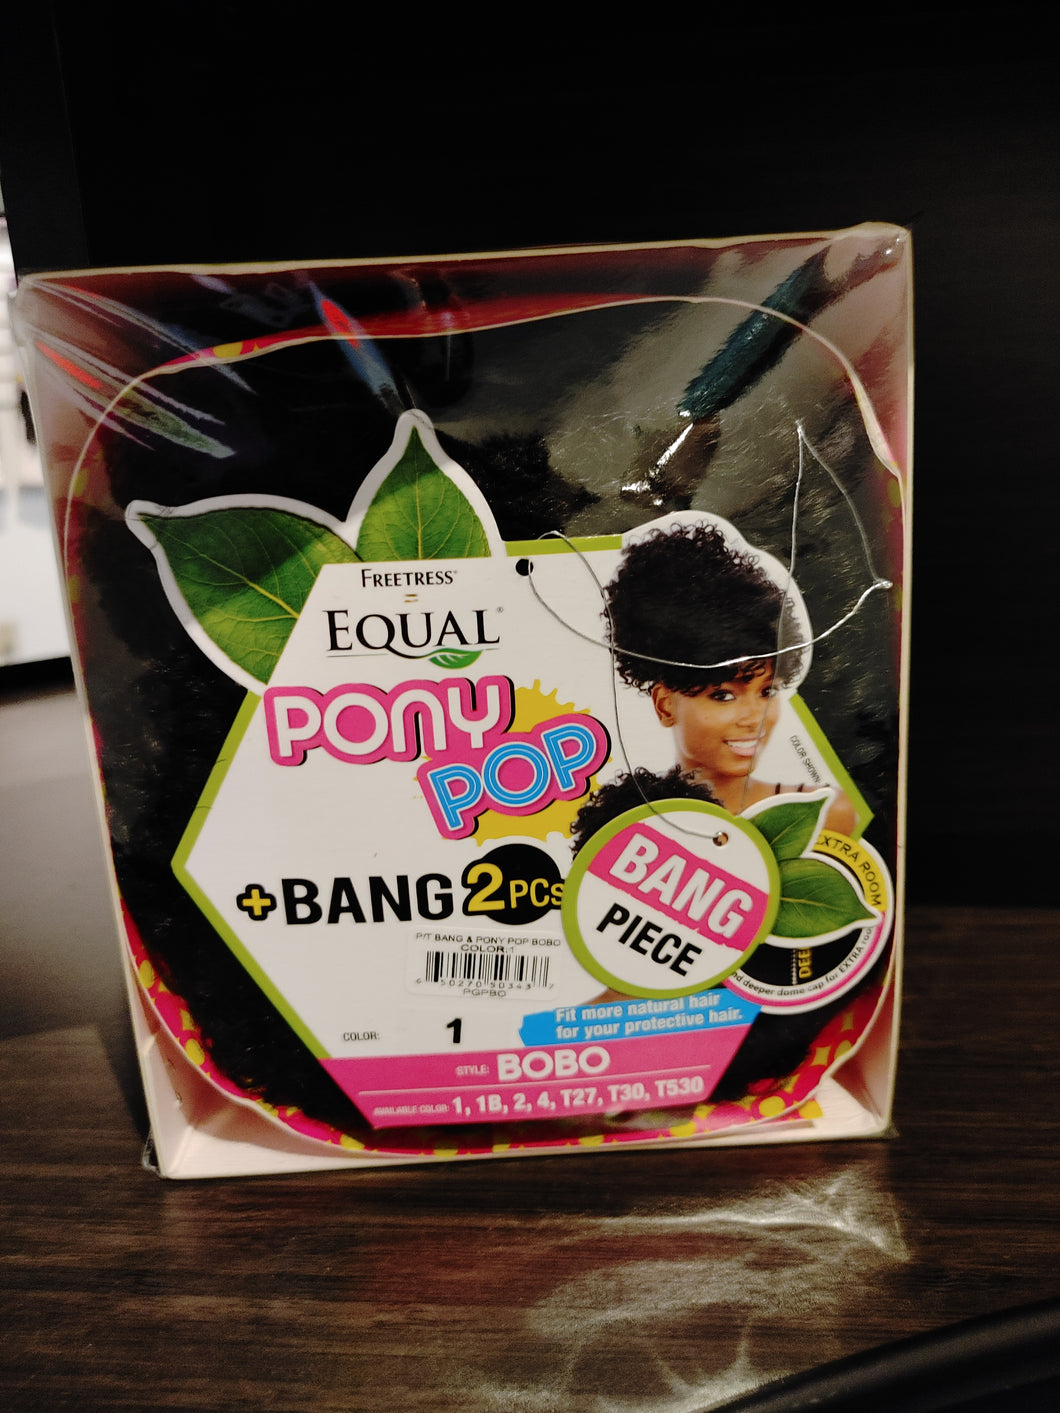 Equal Pony Pop & Bang